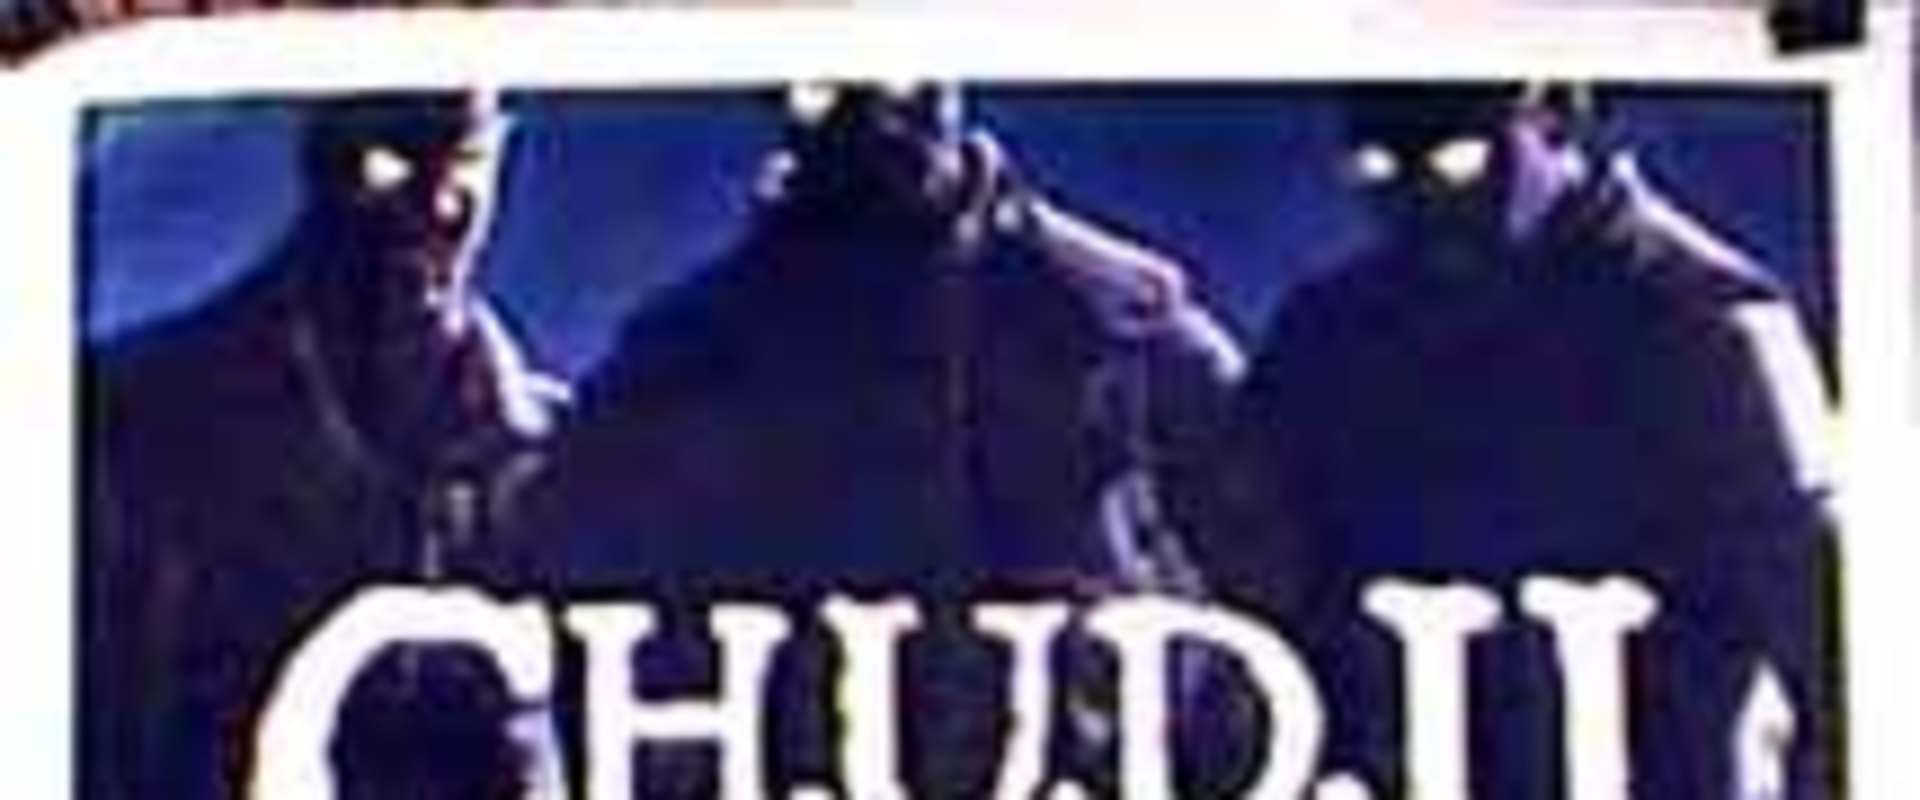 C.H.U.D. II - Bud the Chud background 1